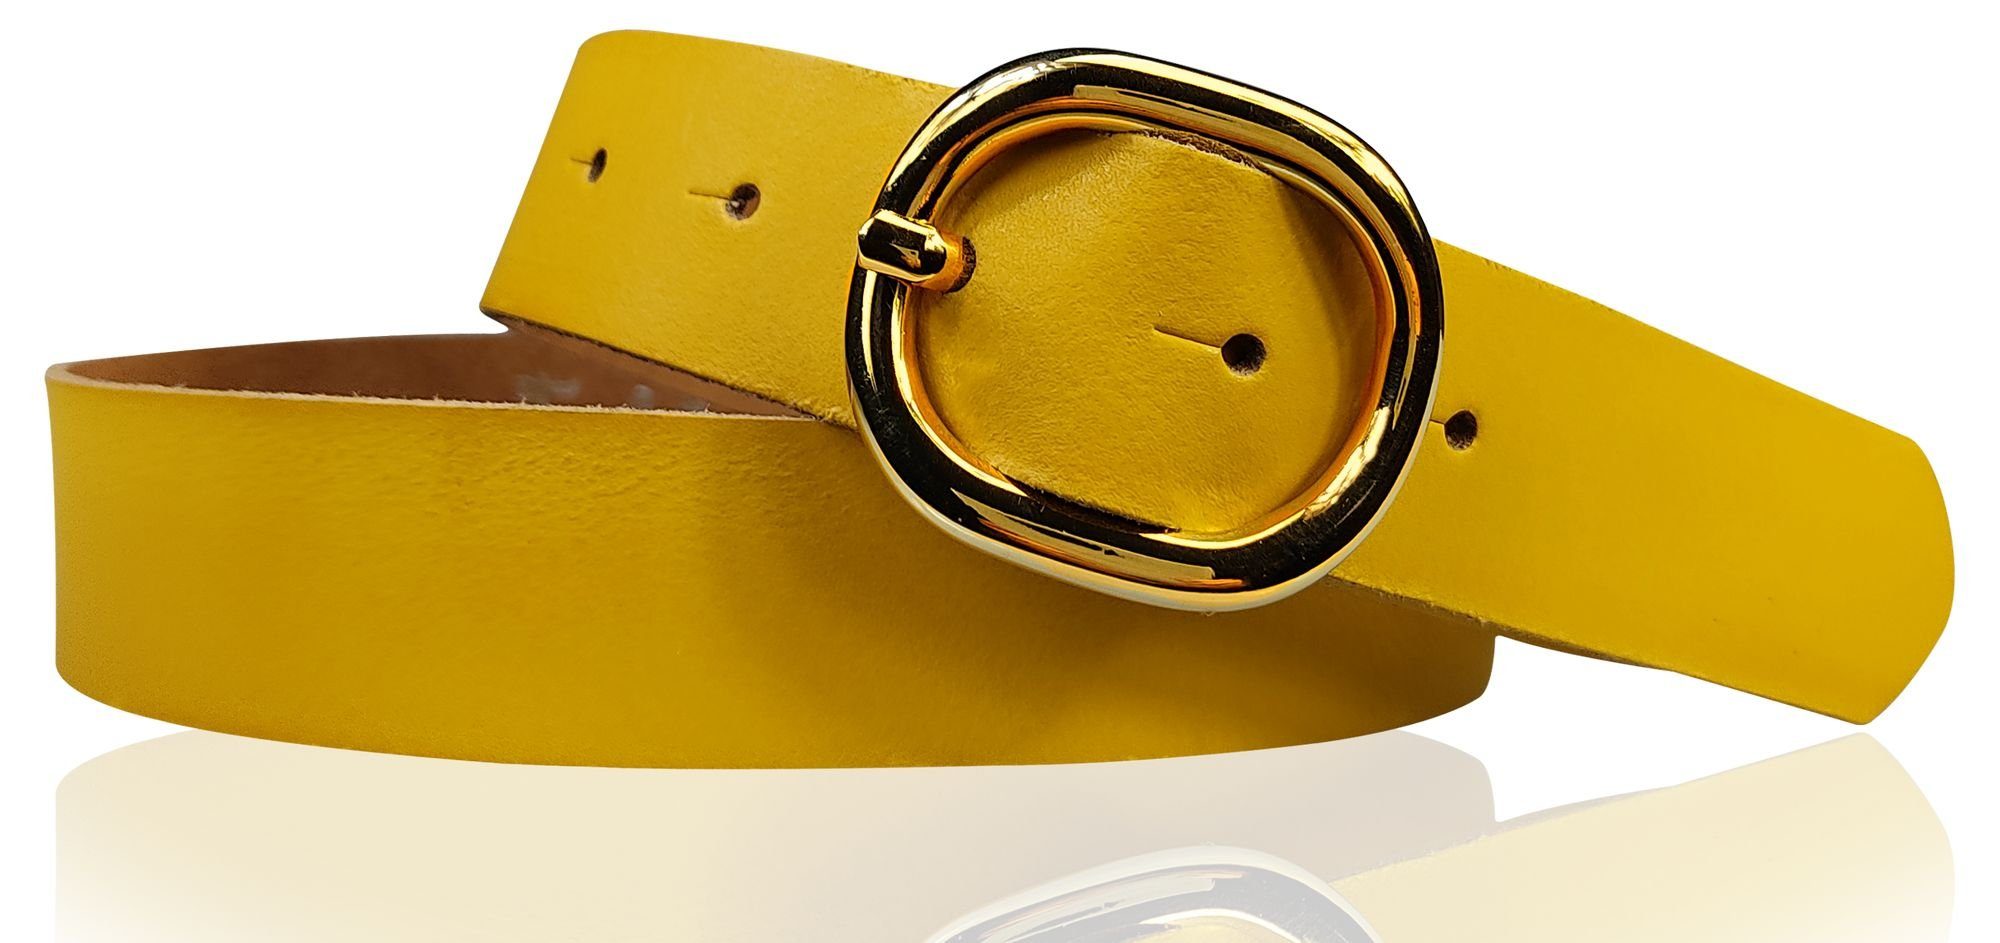 FRONHOFER Hüftgürtel 18621 Damengürtel 3 cm goldene ovale Schnalle, echt Ledergürtel plastikfrei Curry